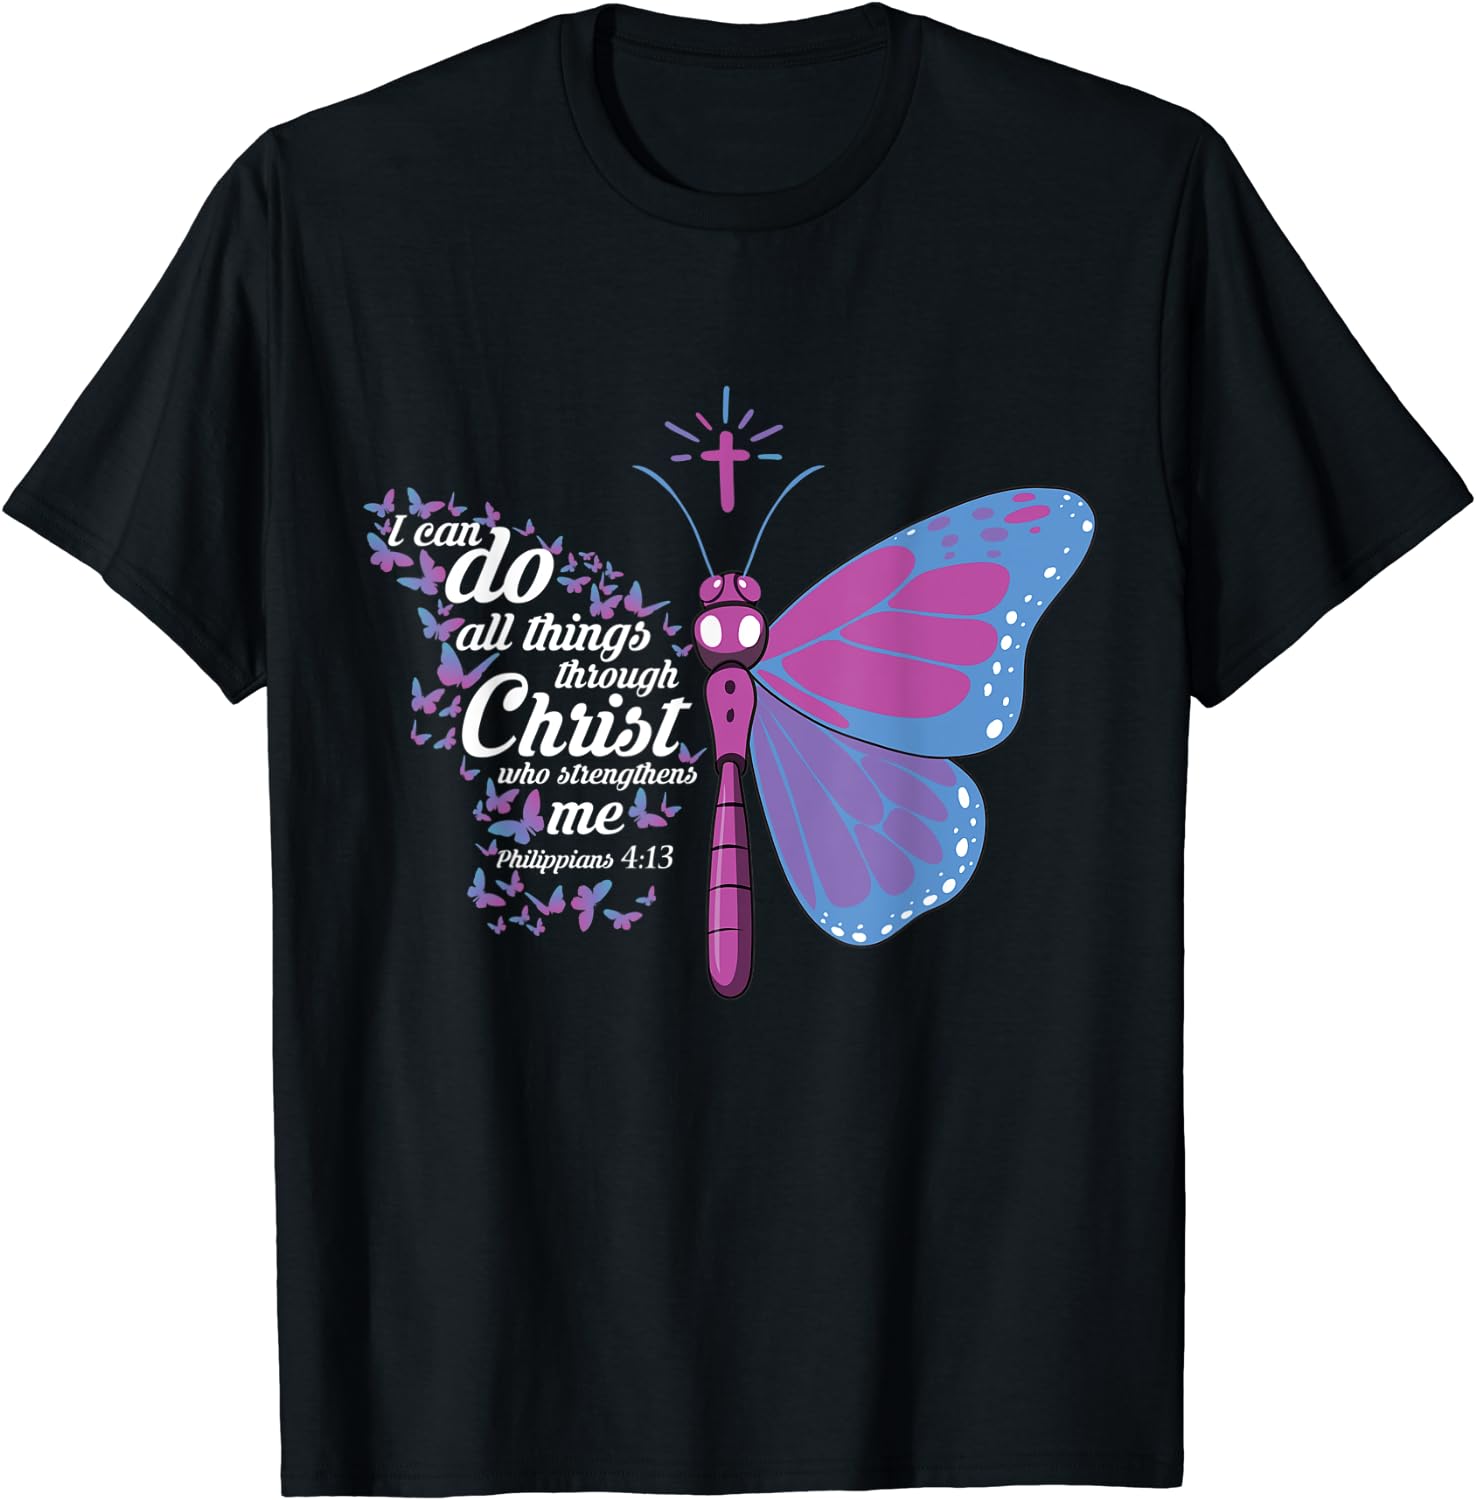 I Can Do All Things Through Christ Christian T-Shirt Black X-Large ...